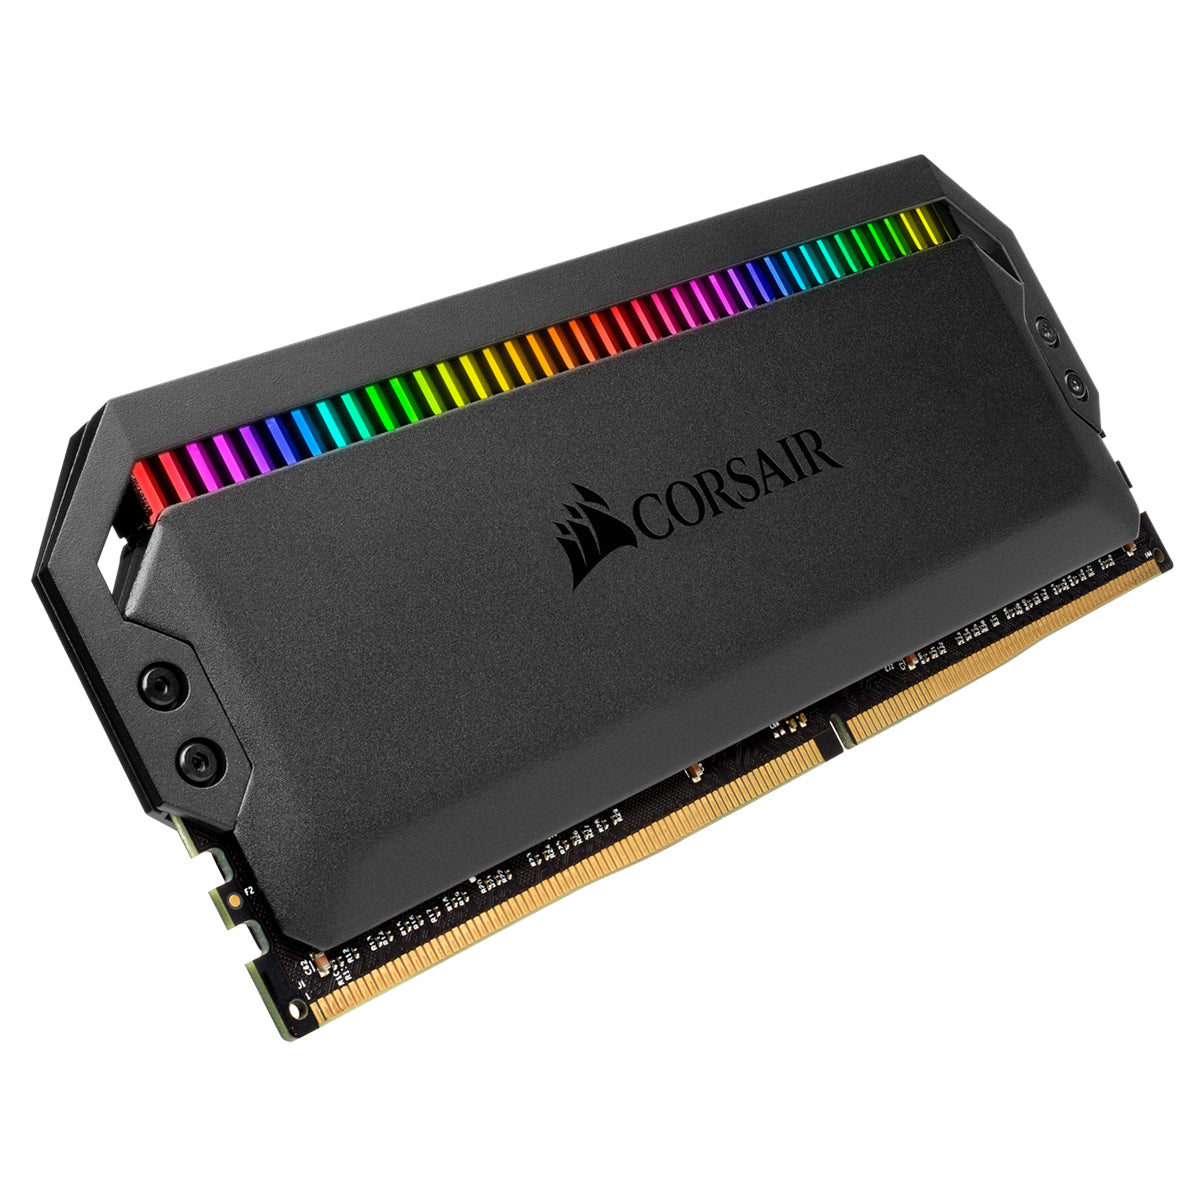 CORSAIR Dominator Platinum RGB 8GB x2 DDR4 CL16 w/ 3200MHz Base Speed for Intel XMP 2.0 & AMD Ryzen